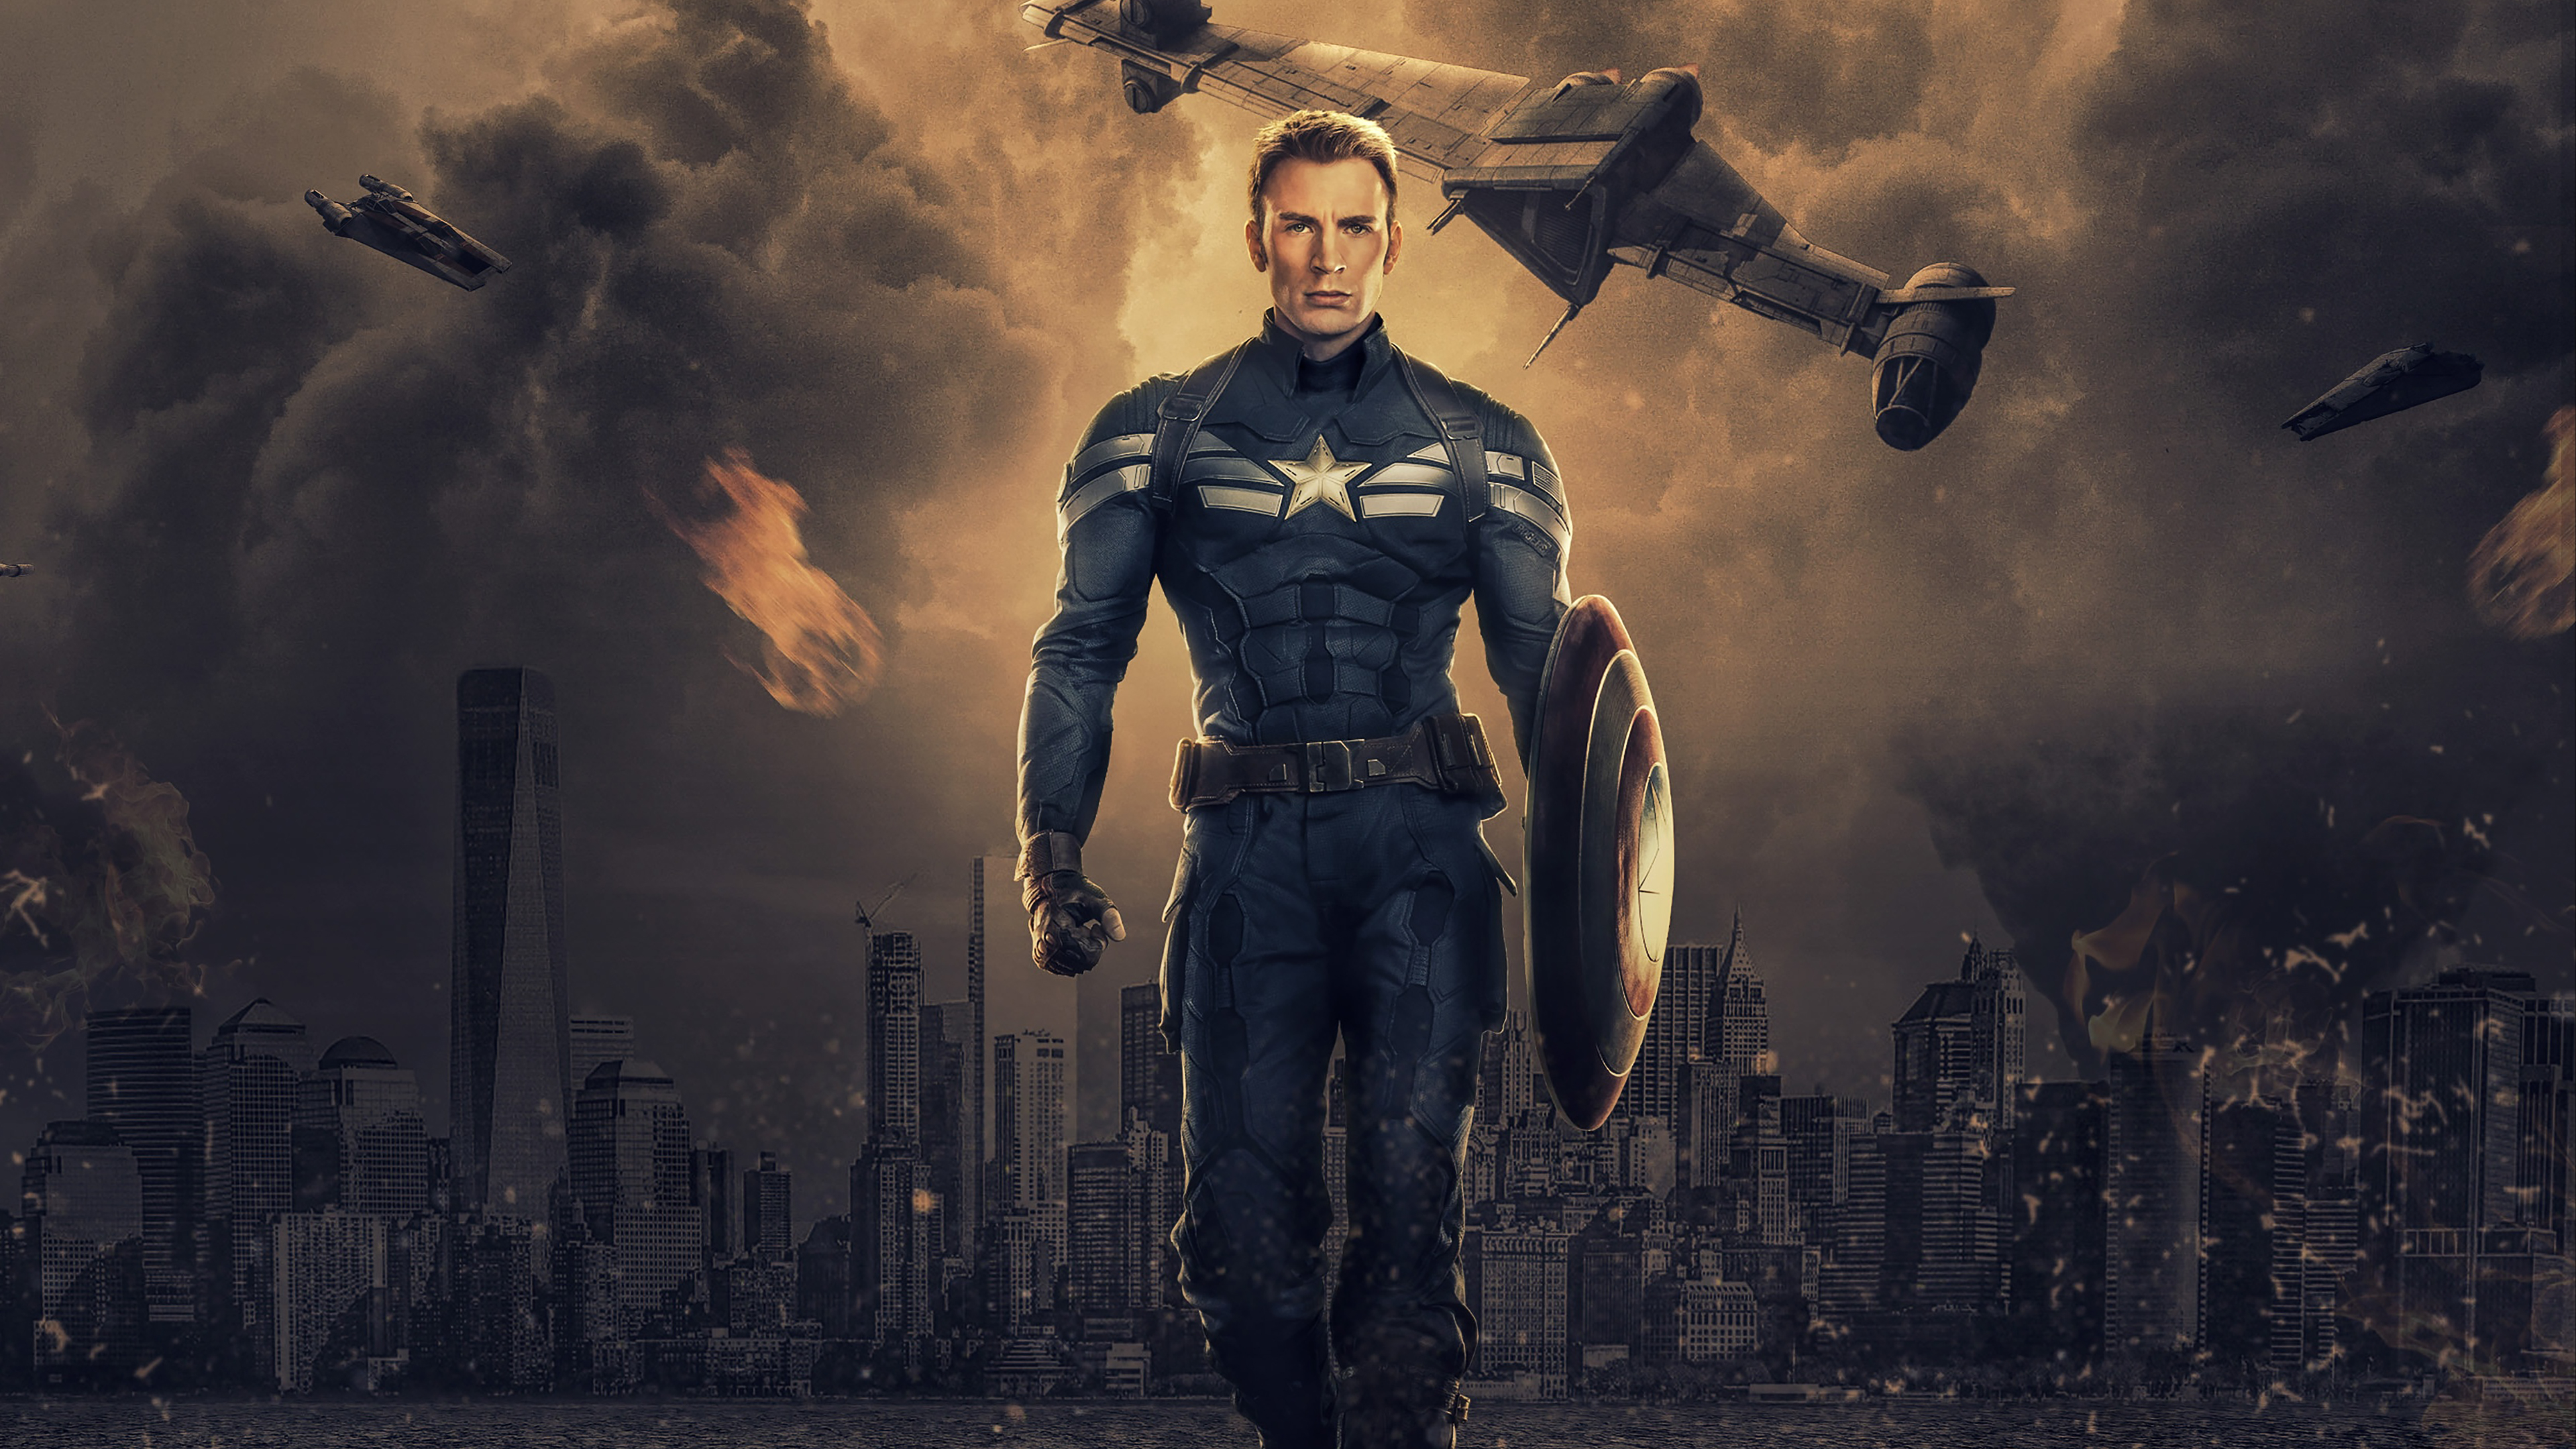 Chris Evans as Captain America 4K Wallpapers